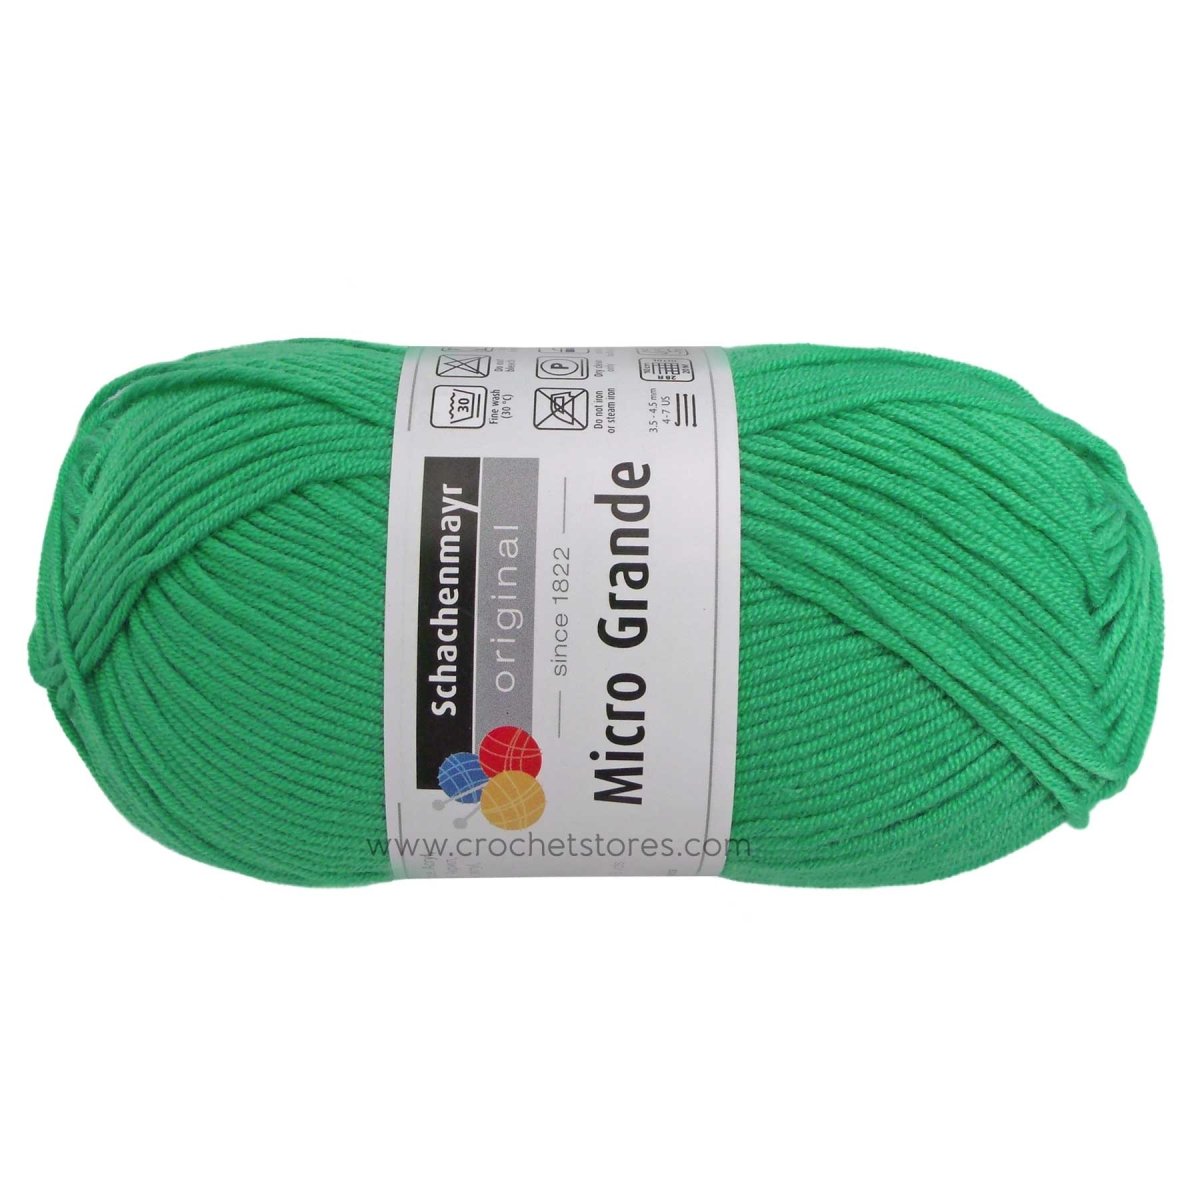 MICRO GRANDE - Crochetstores9807313-1694082700753154